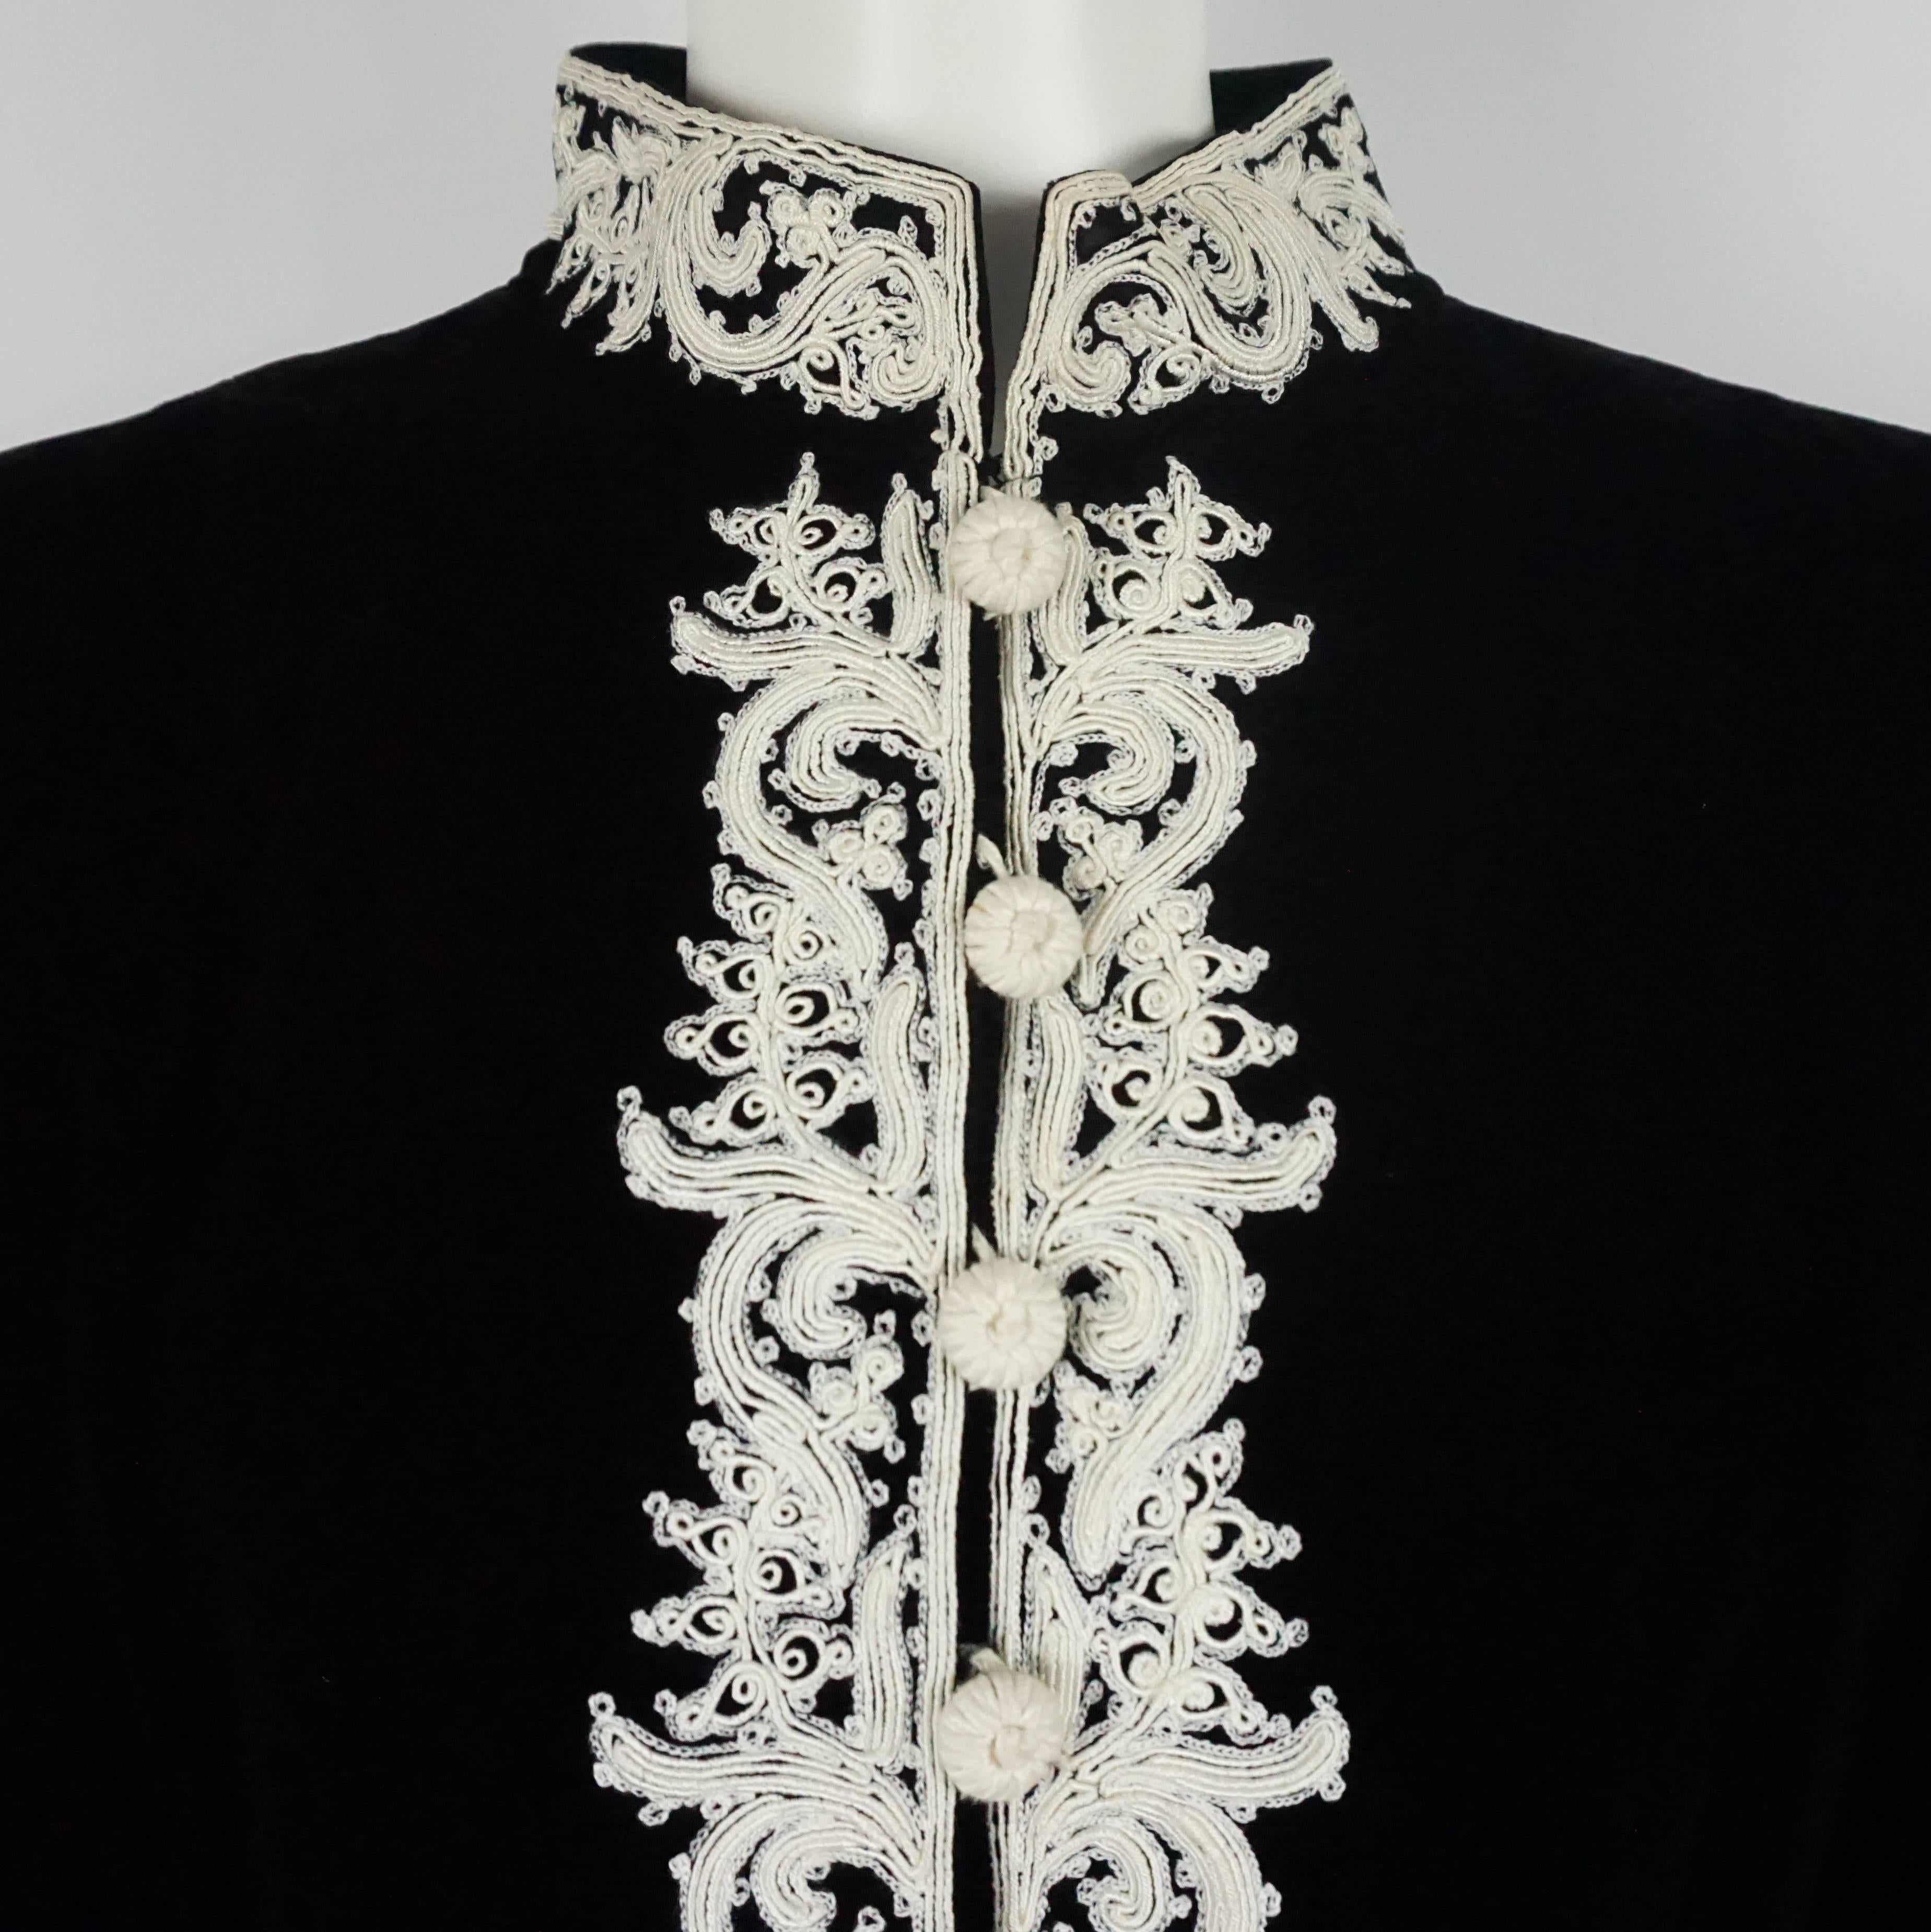 Women's Oscar de la Renta Black Velvet Skirt Suit with White Embroidery - 10 - 1990s For Sale